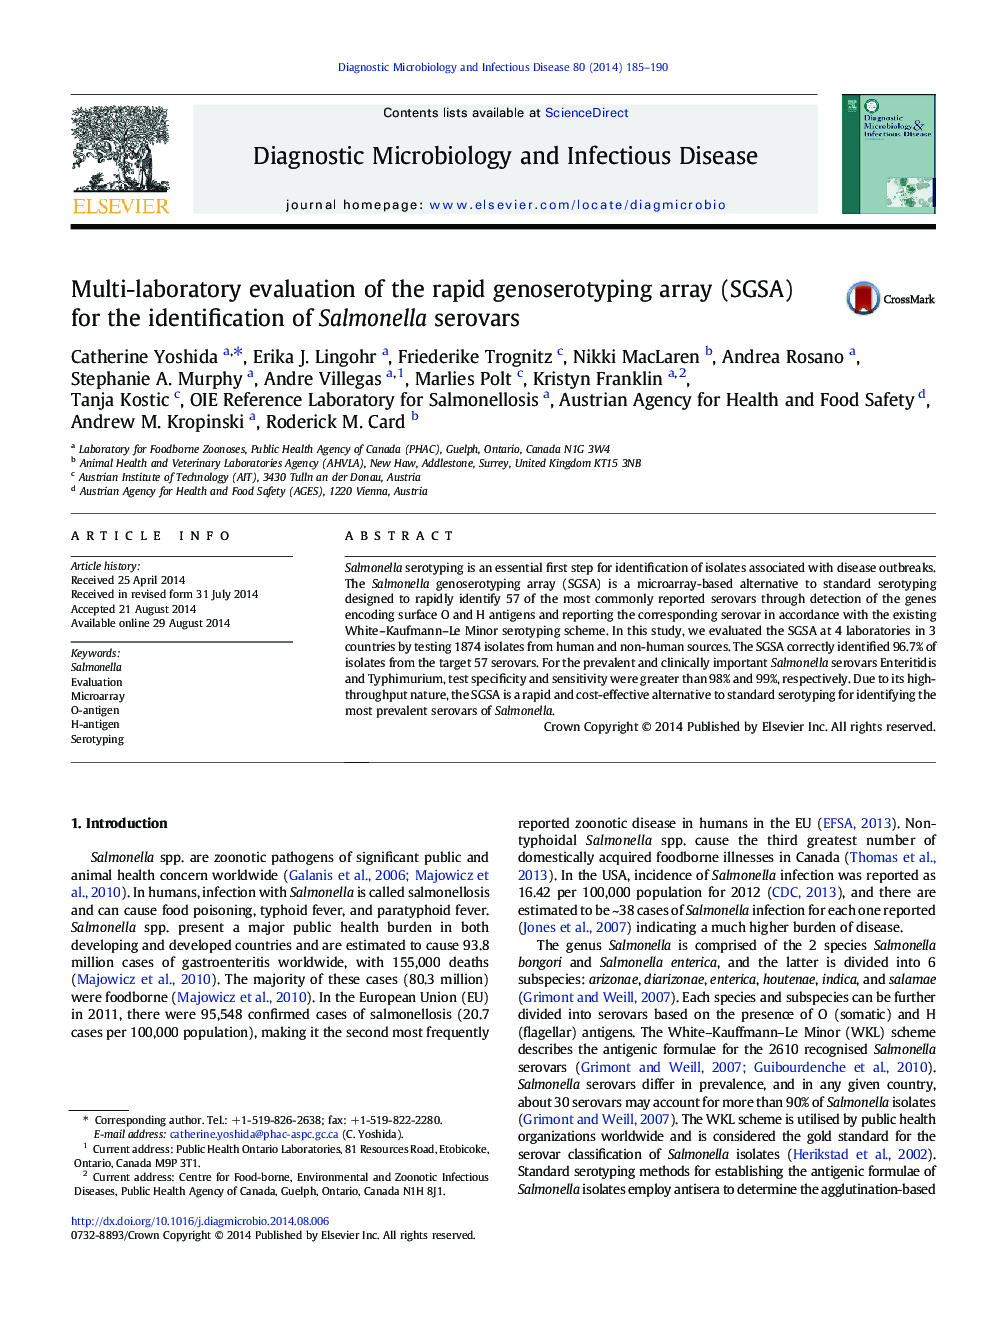 Multi-laboratory evaluation of the rapid genoserotyping array (SGSA) for the identification of Salmonella serovars